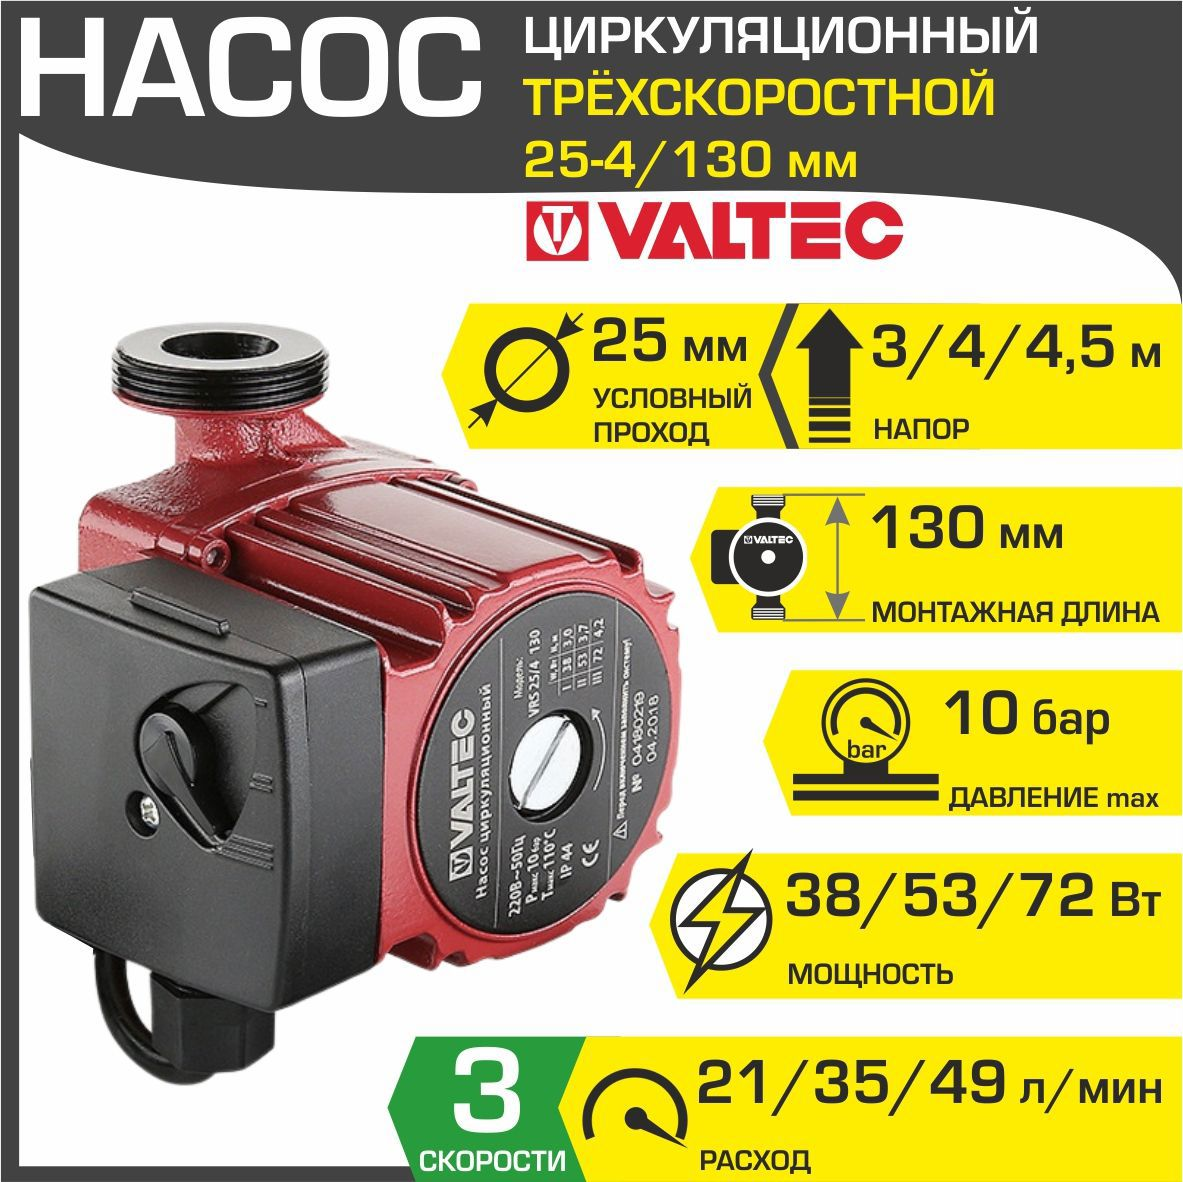  циркуляционный Valtec VRS.254.13.0 RS 25/4-130 с гайками по цене .